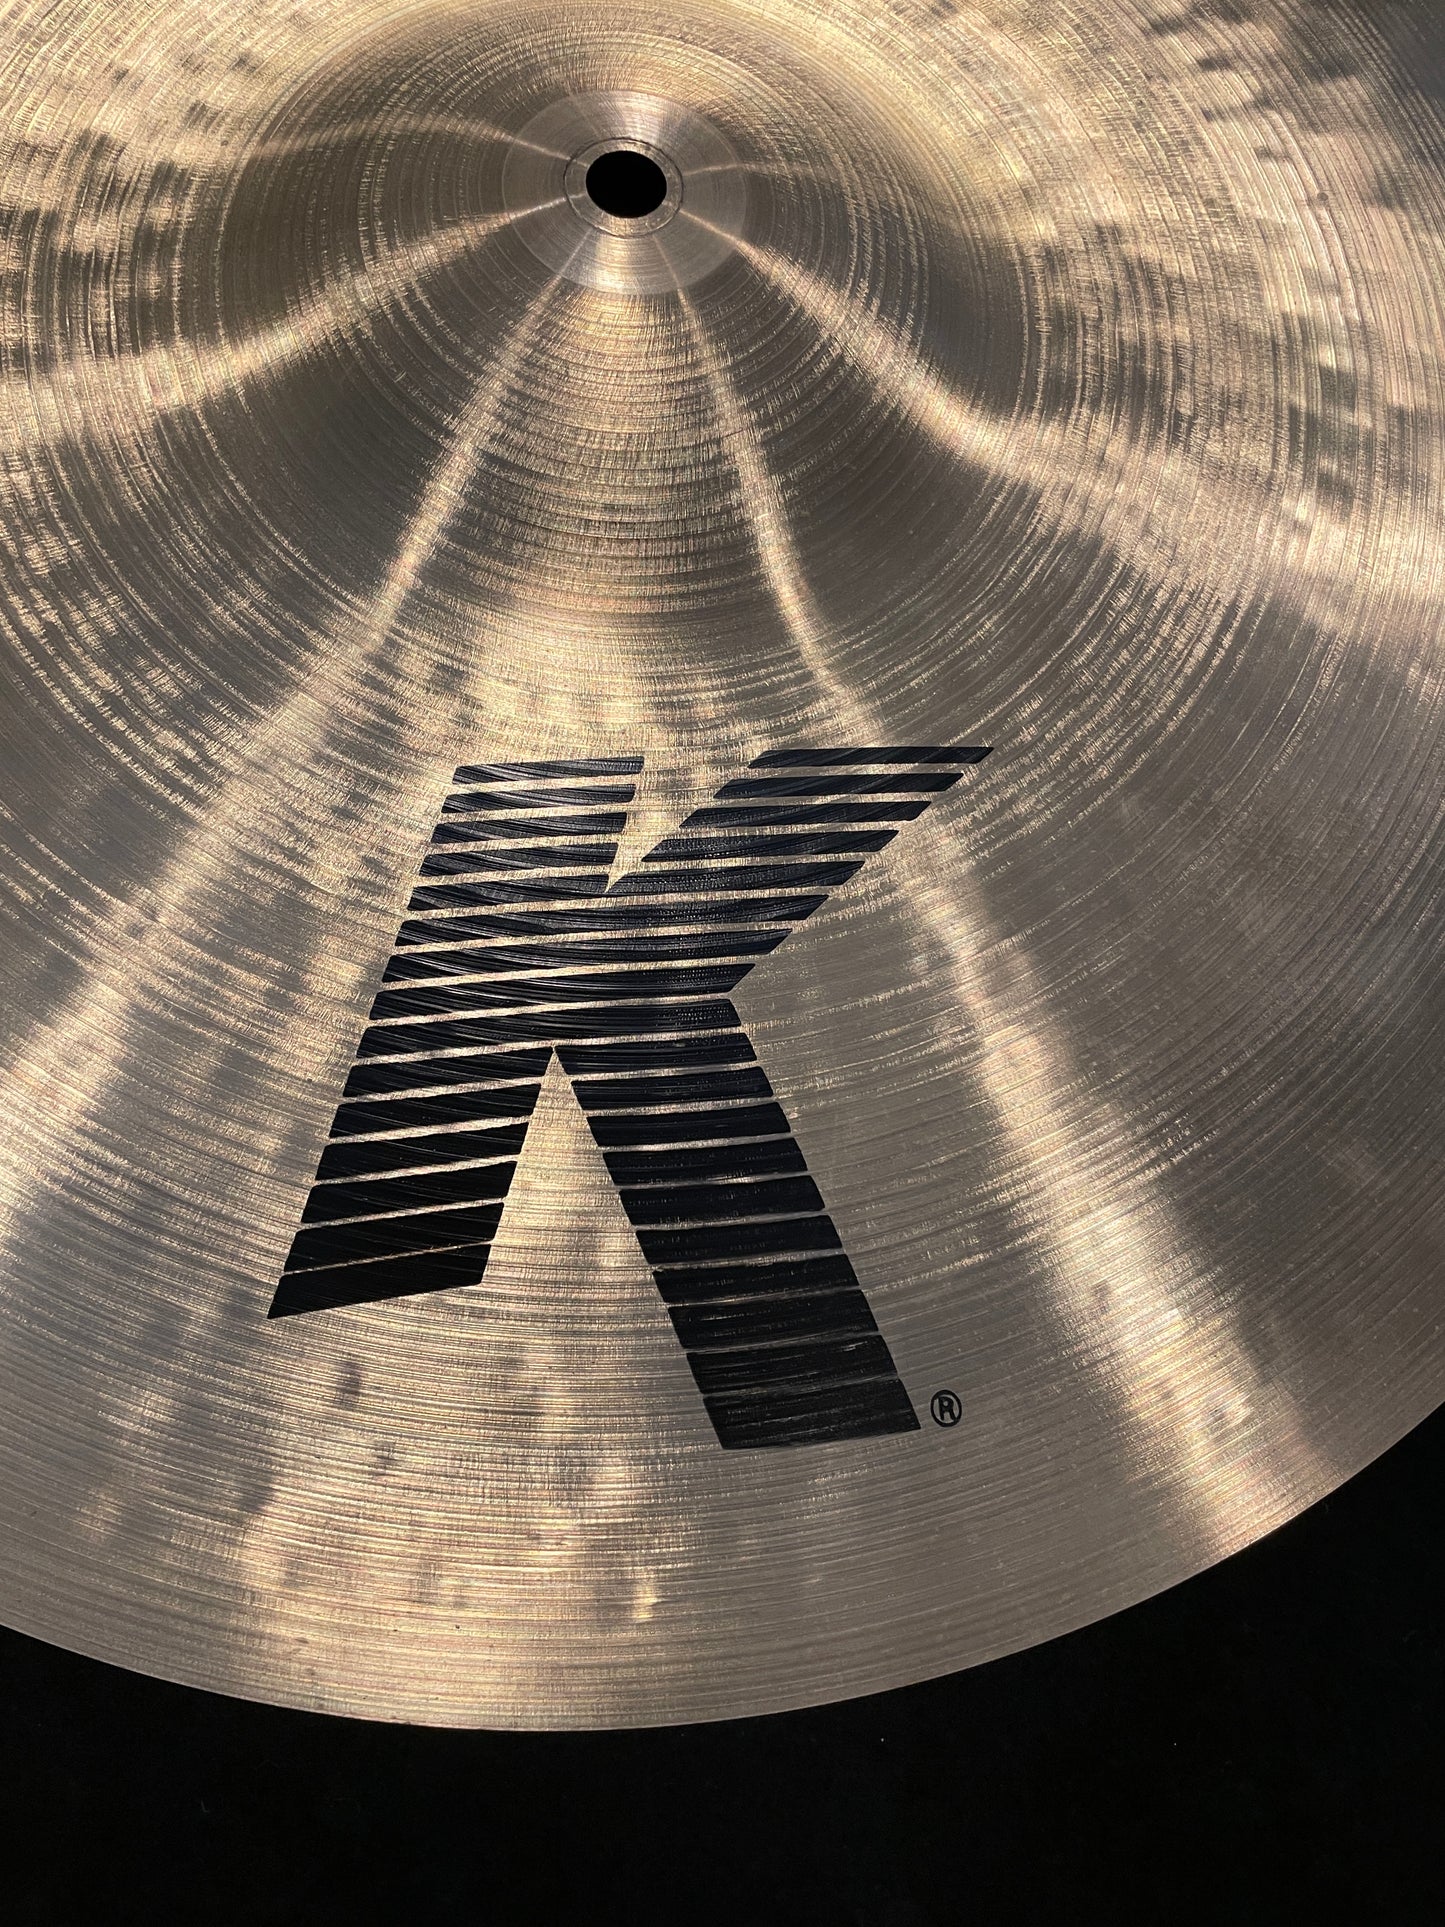 18" Zildjian K Custom Session Crash Cymbal 1446g K0991